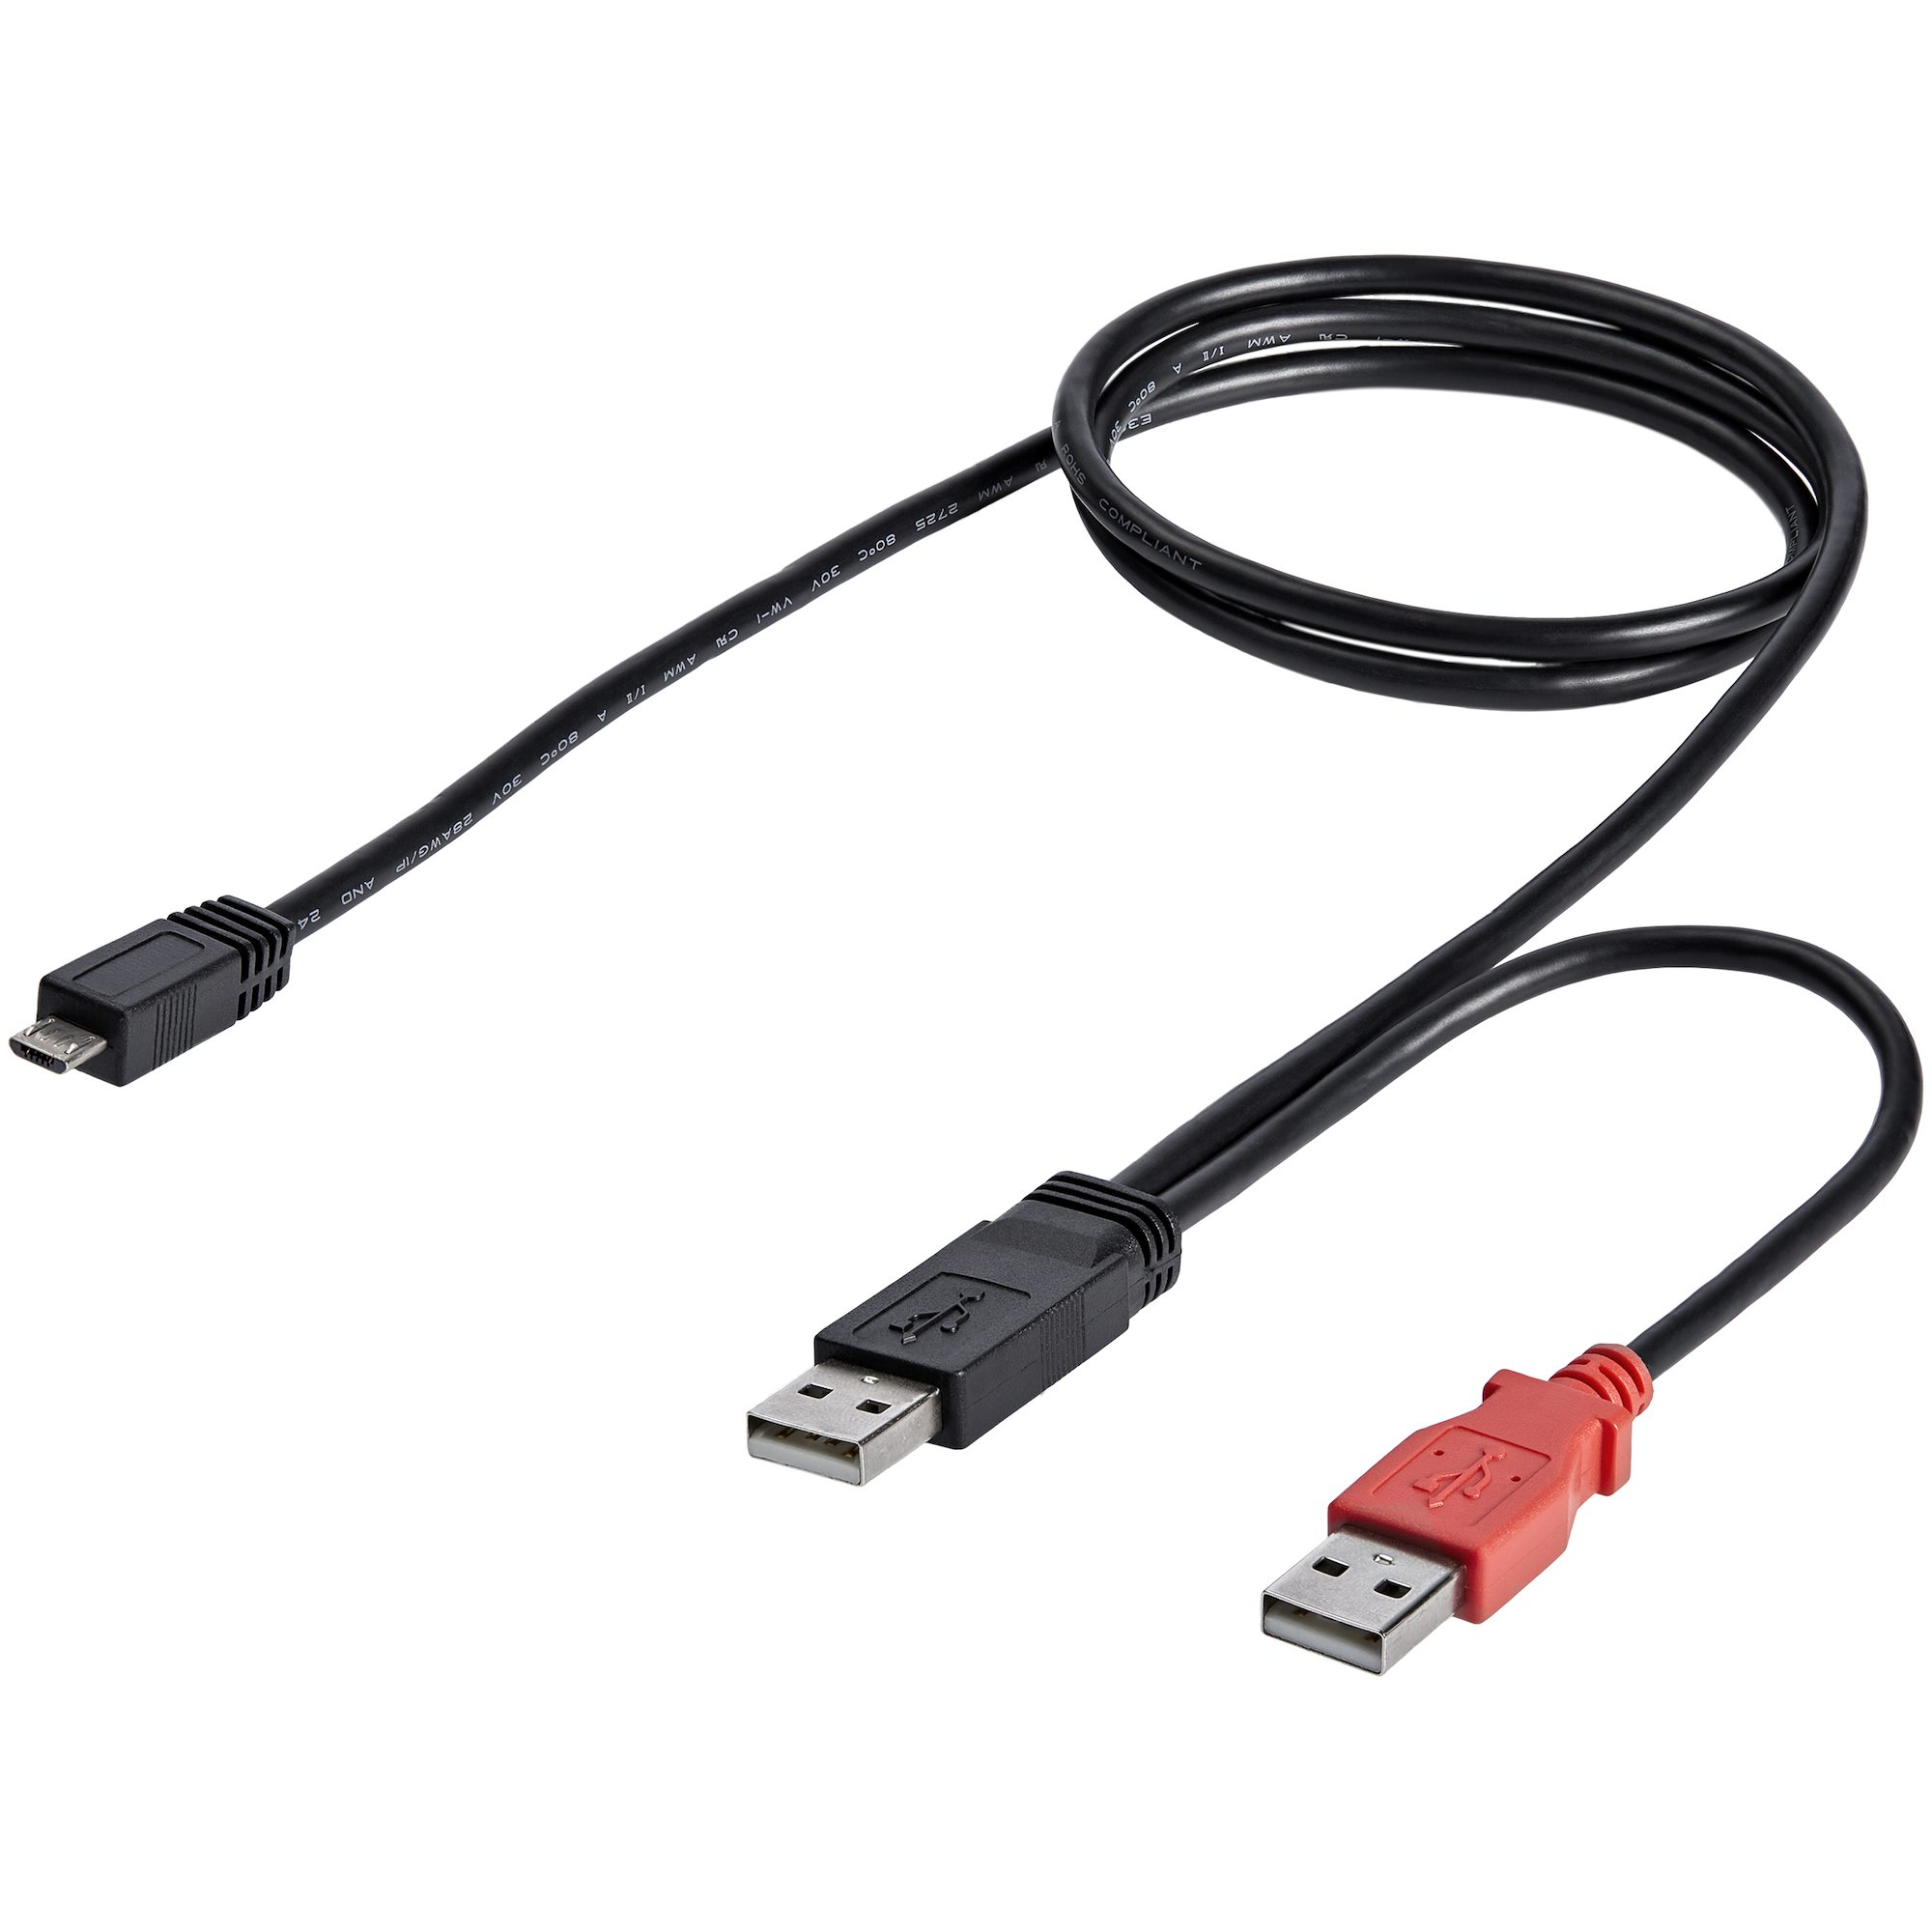 3 USB Y for External Hard Drive - Micro USB | StarTech.com